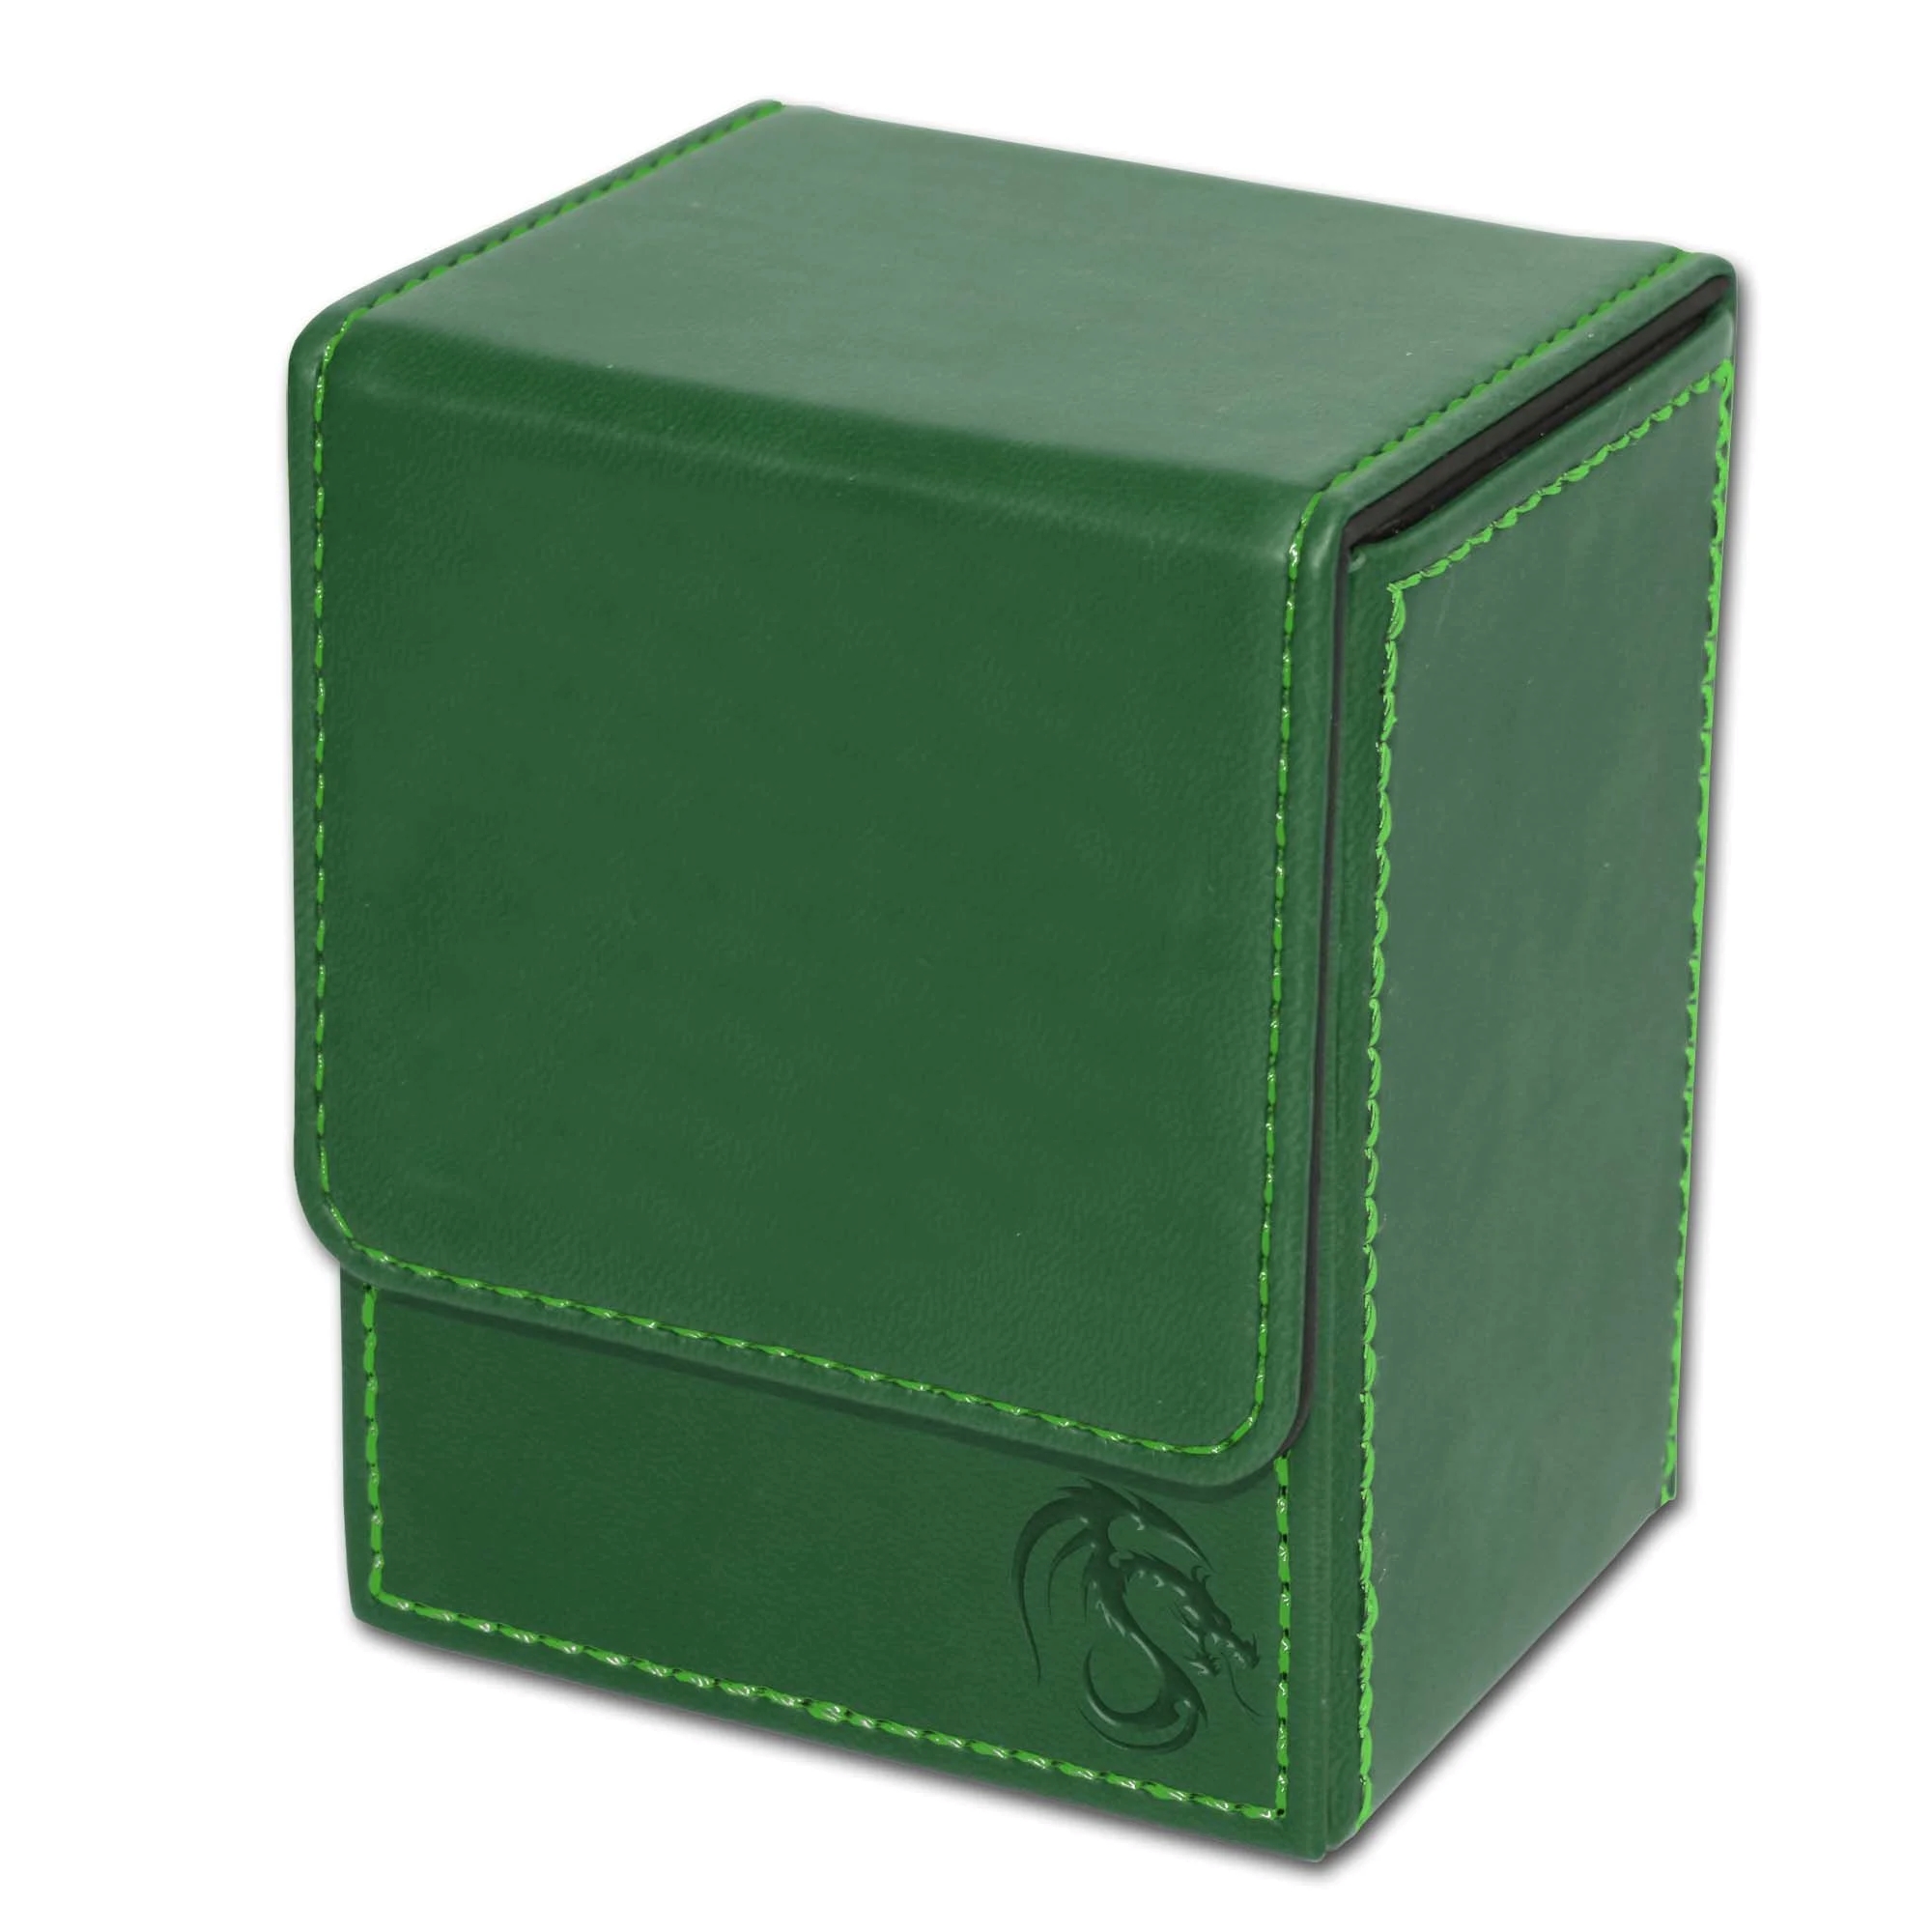 BCW Deck Case Lx - Green